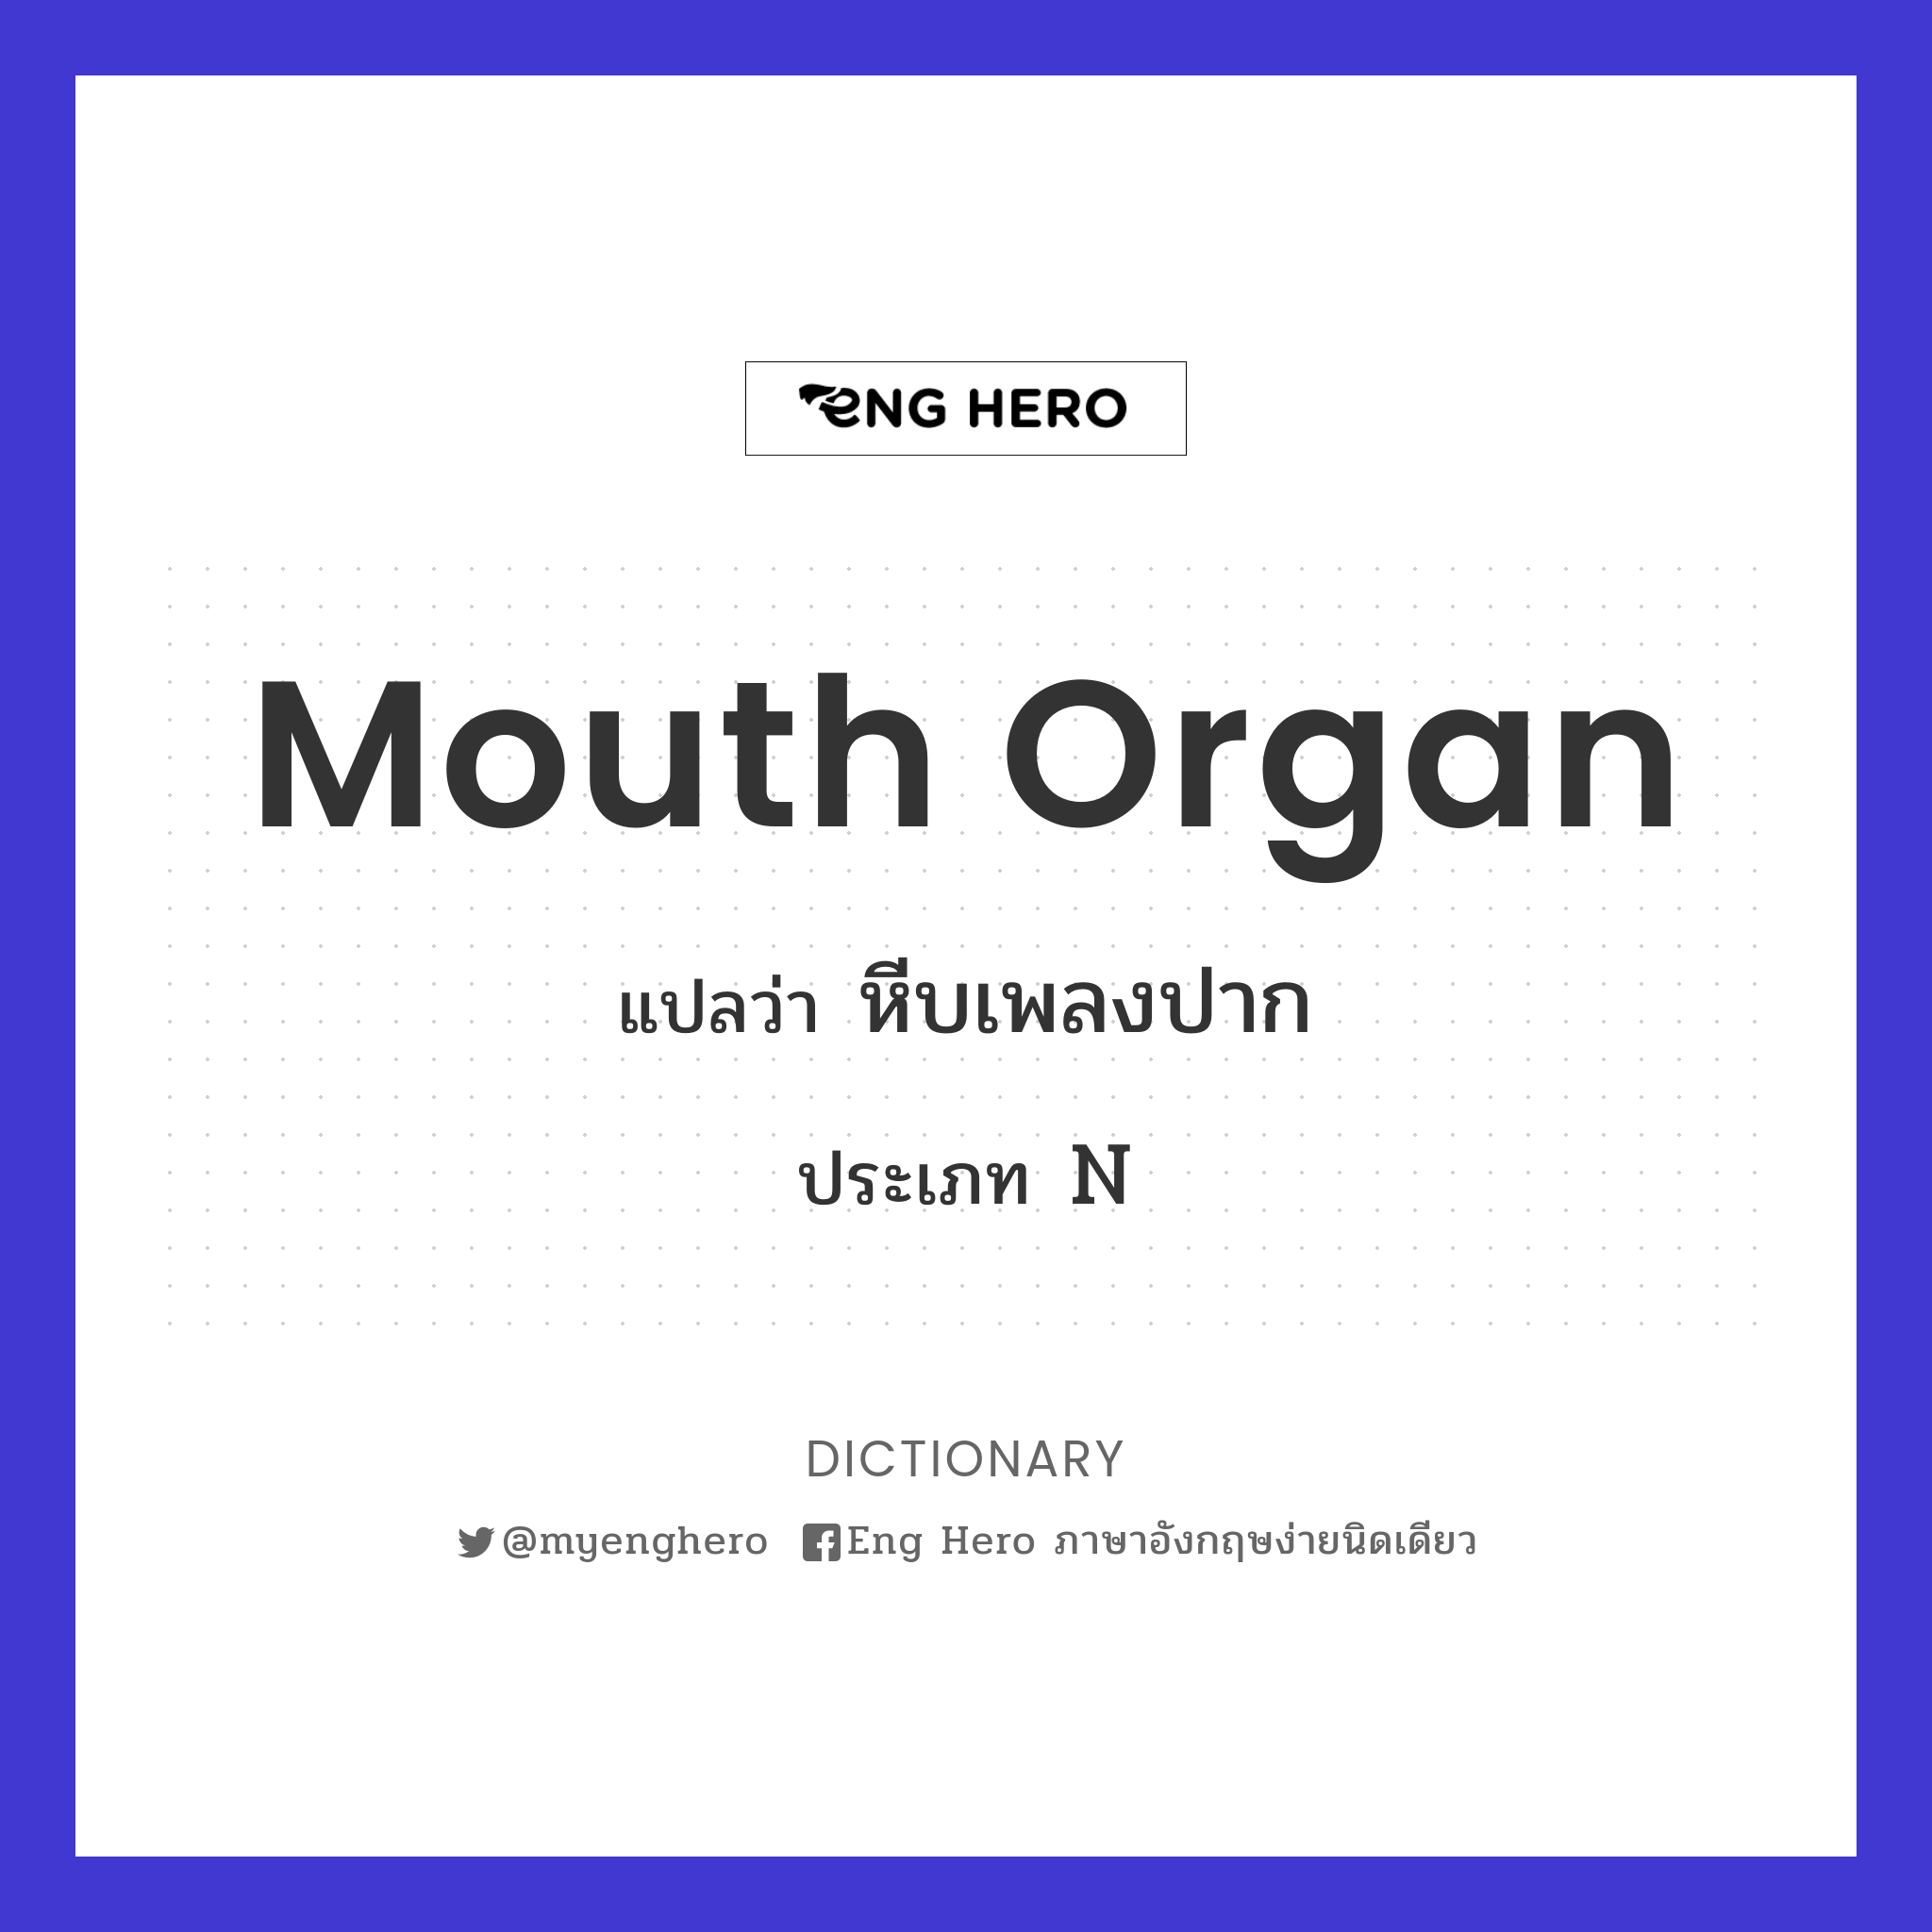 mouth organ